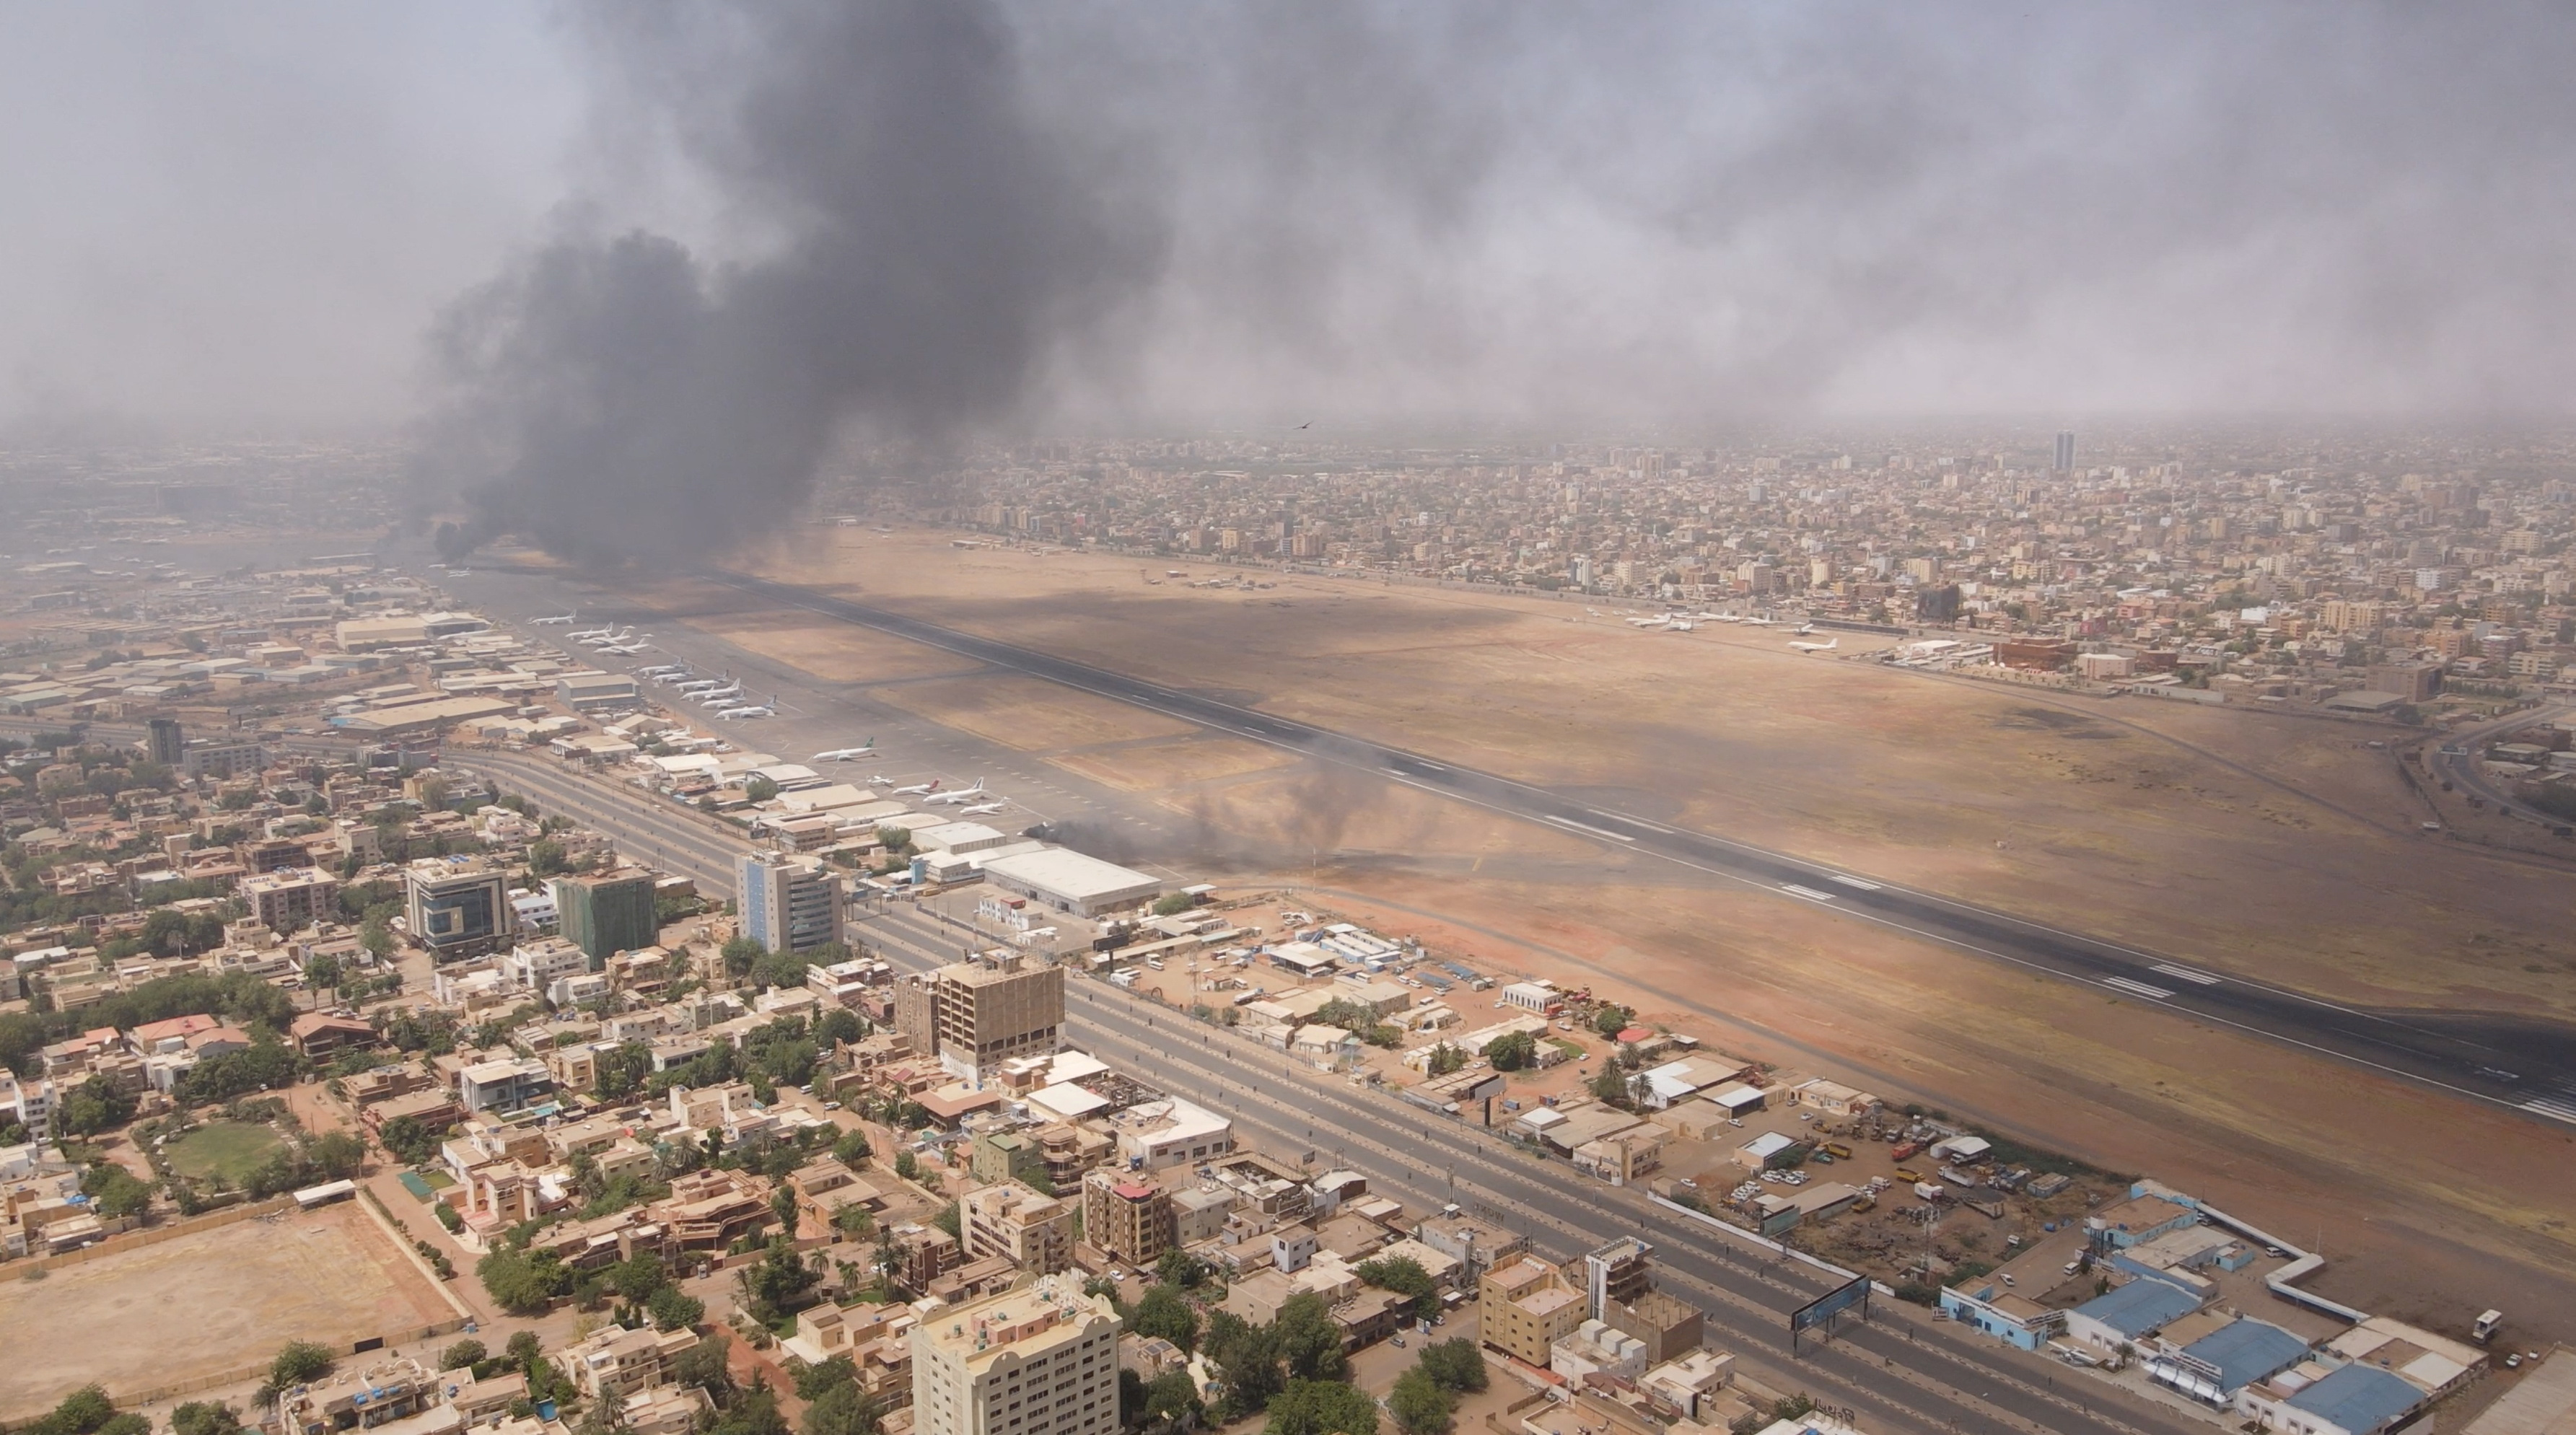 The army and paramilitaries clash in a power struggle in Khartoum (Instagram @lostshmi/via REUTERS)